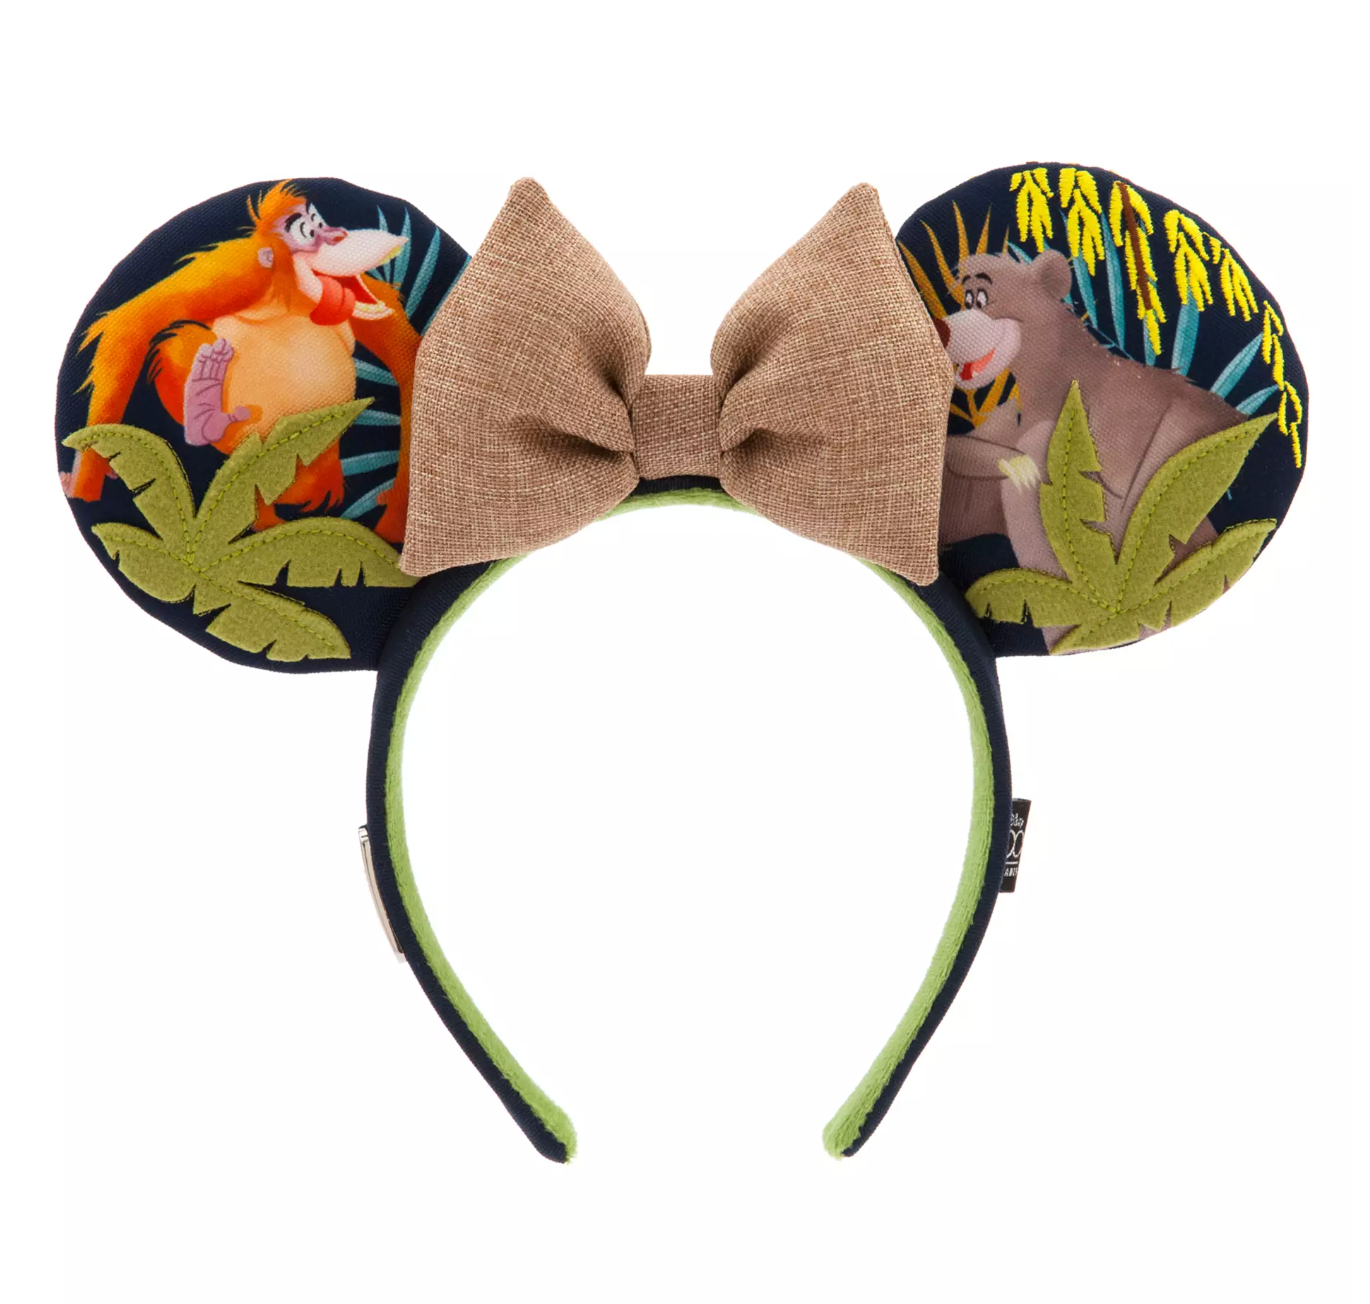 Disney 100 Celebration Decades The Jungle Book Ear Headband for Adults New Tag